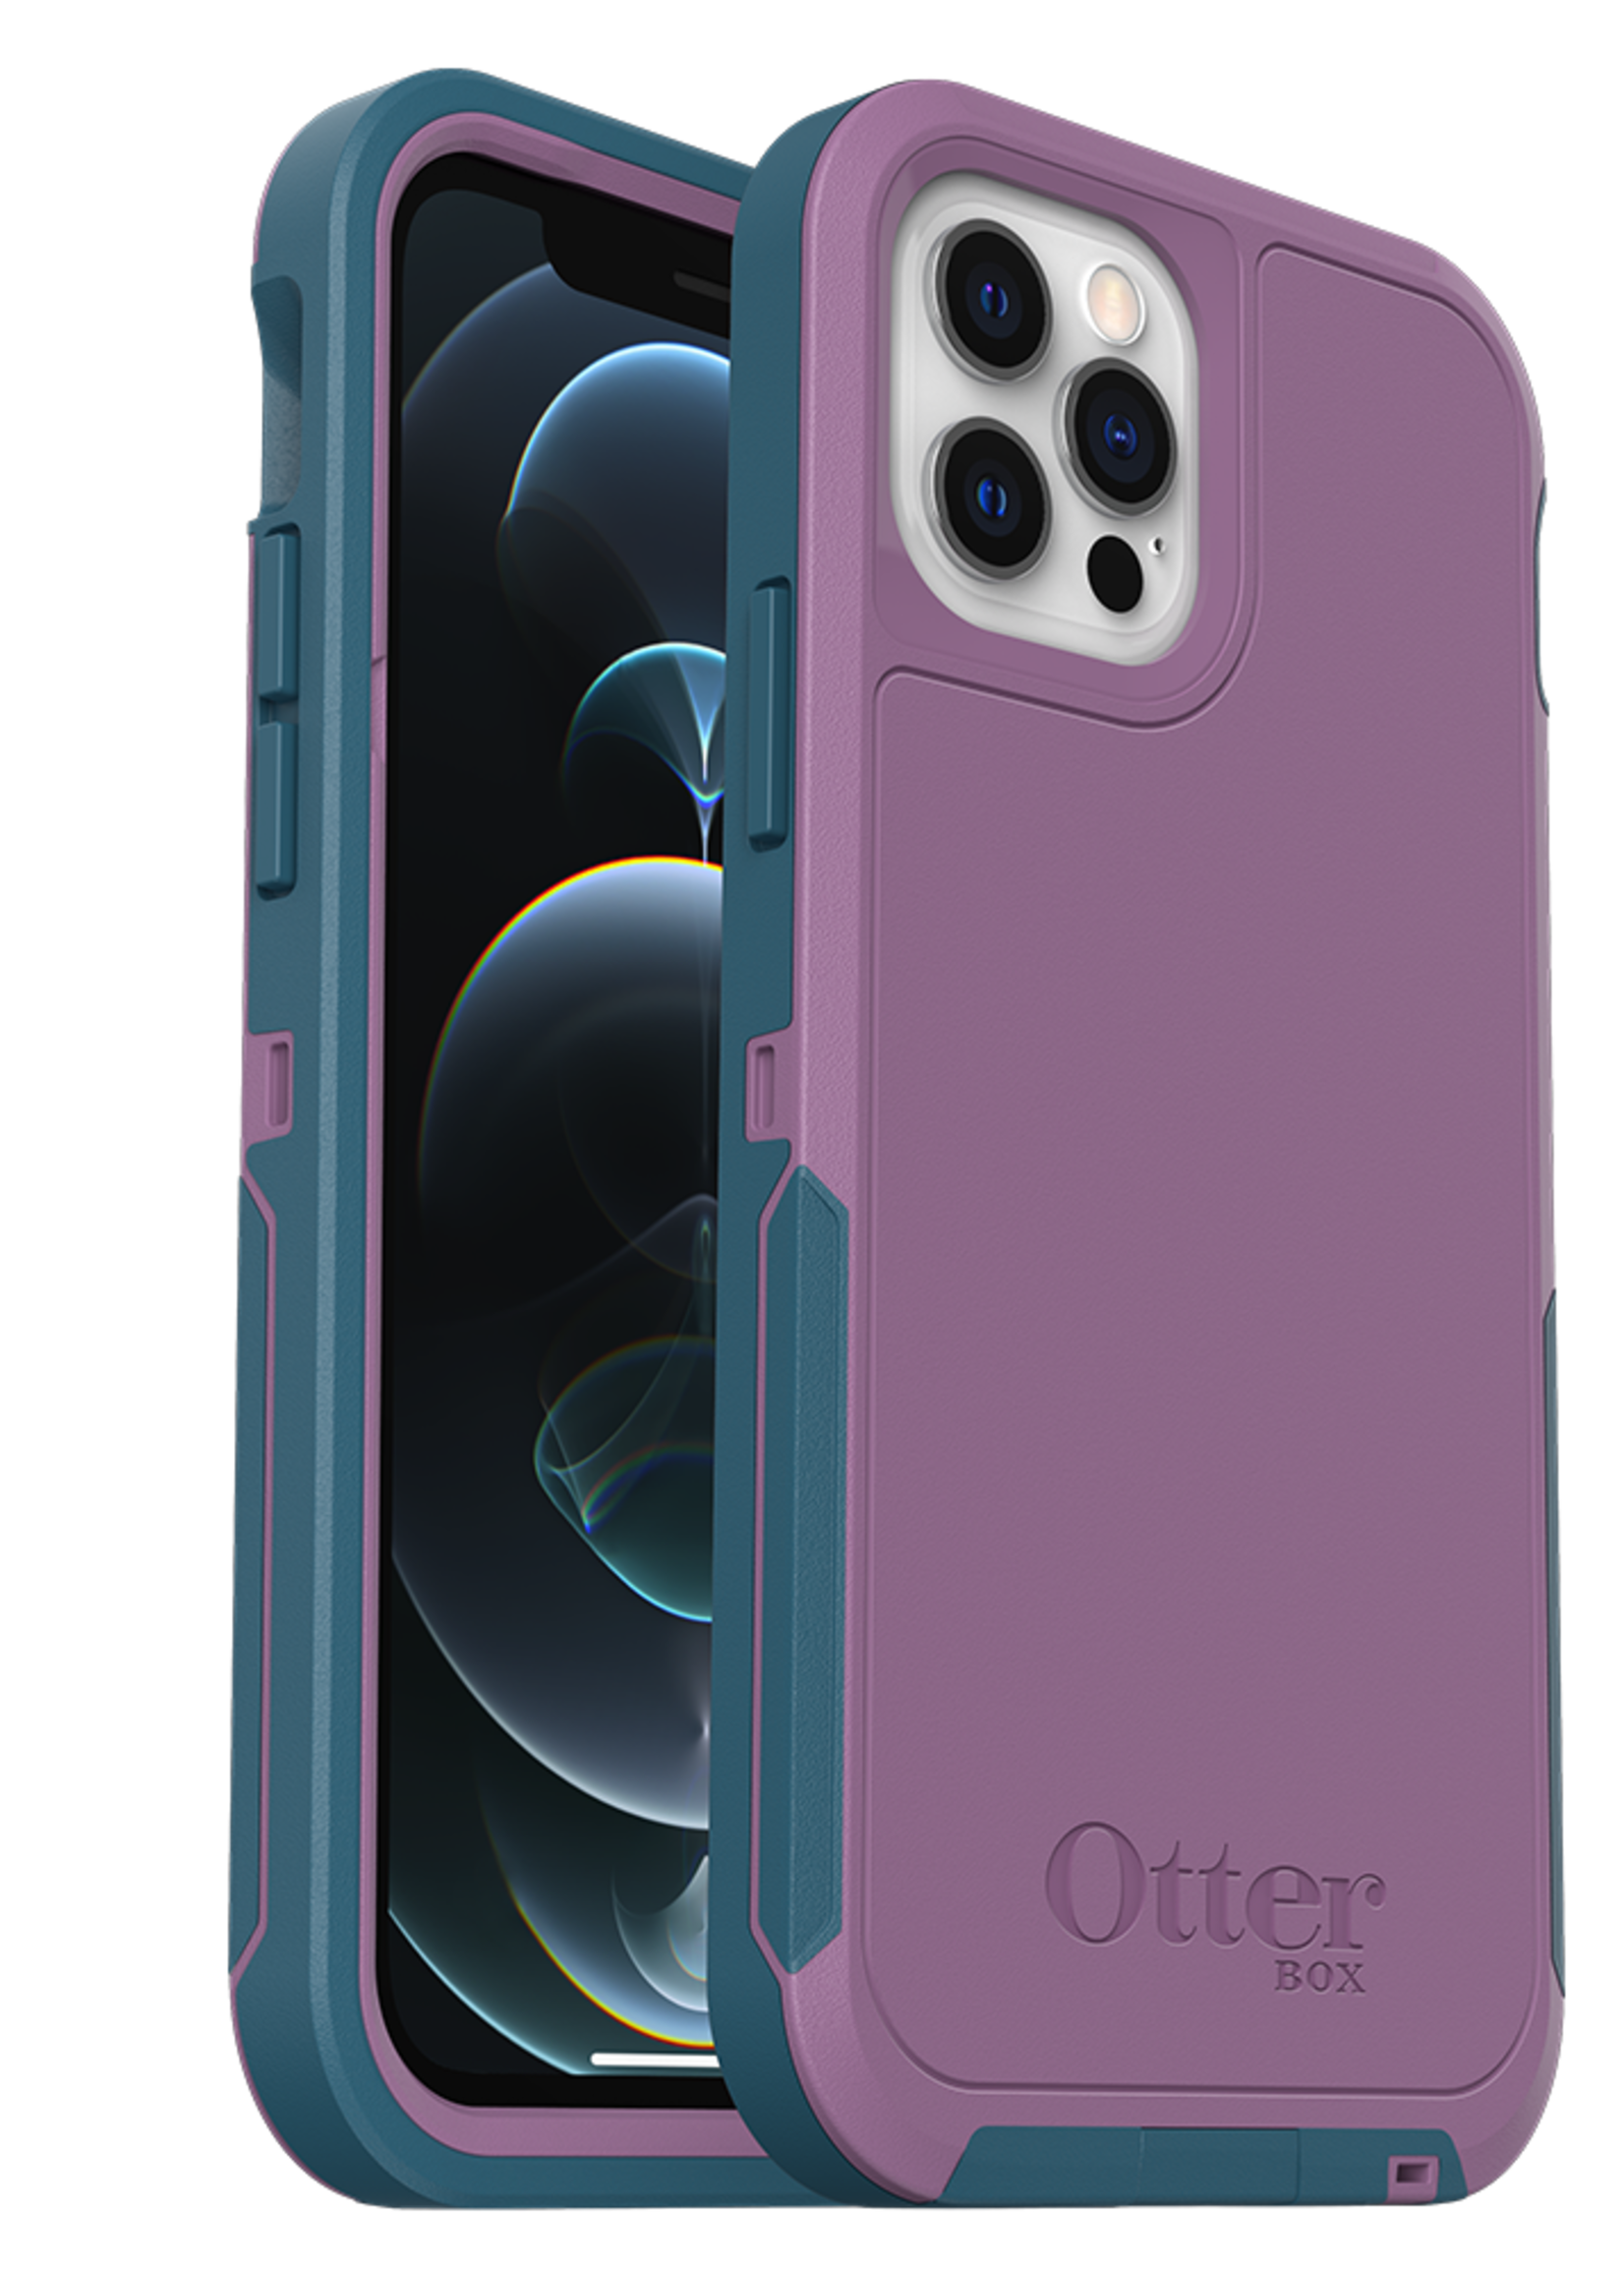 Otterbox OtterBox - Defender Pro XT Case for Apple iPhone 12 / 12 Pro - Lavender Bliss